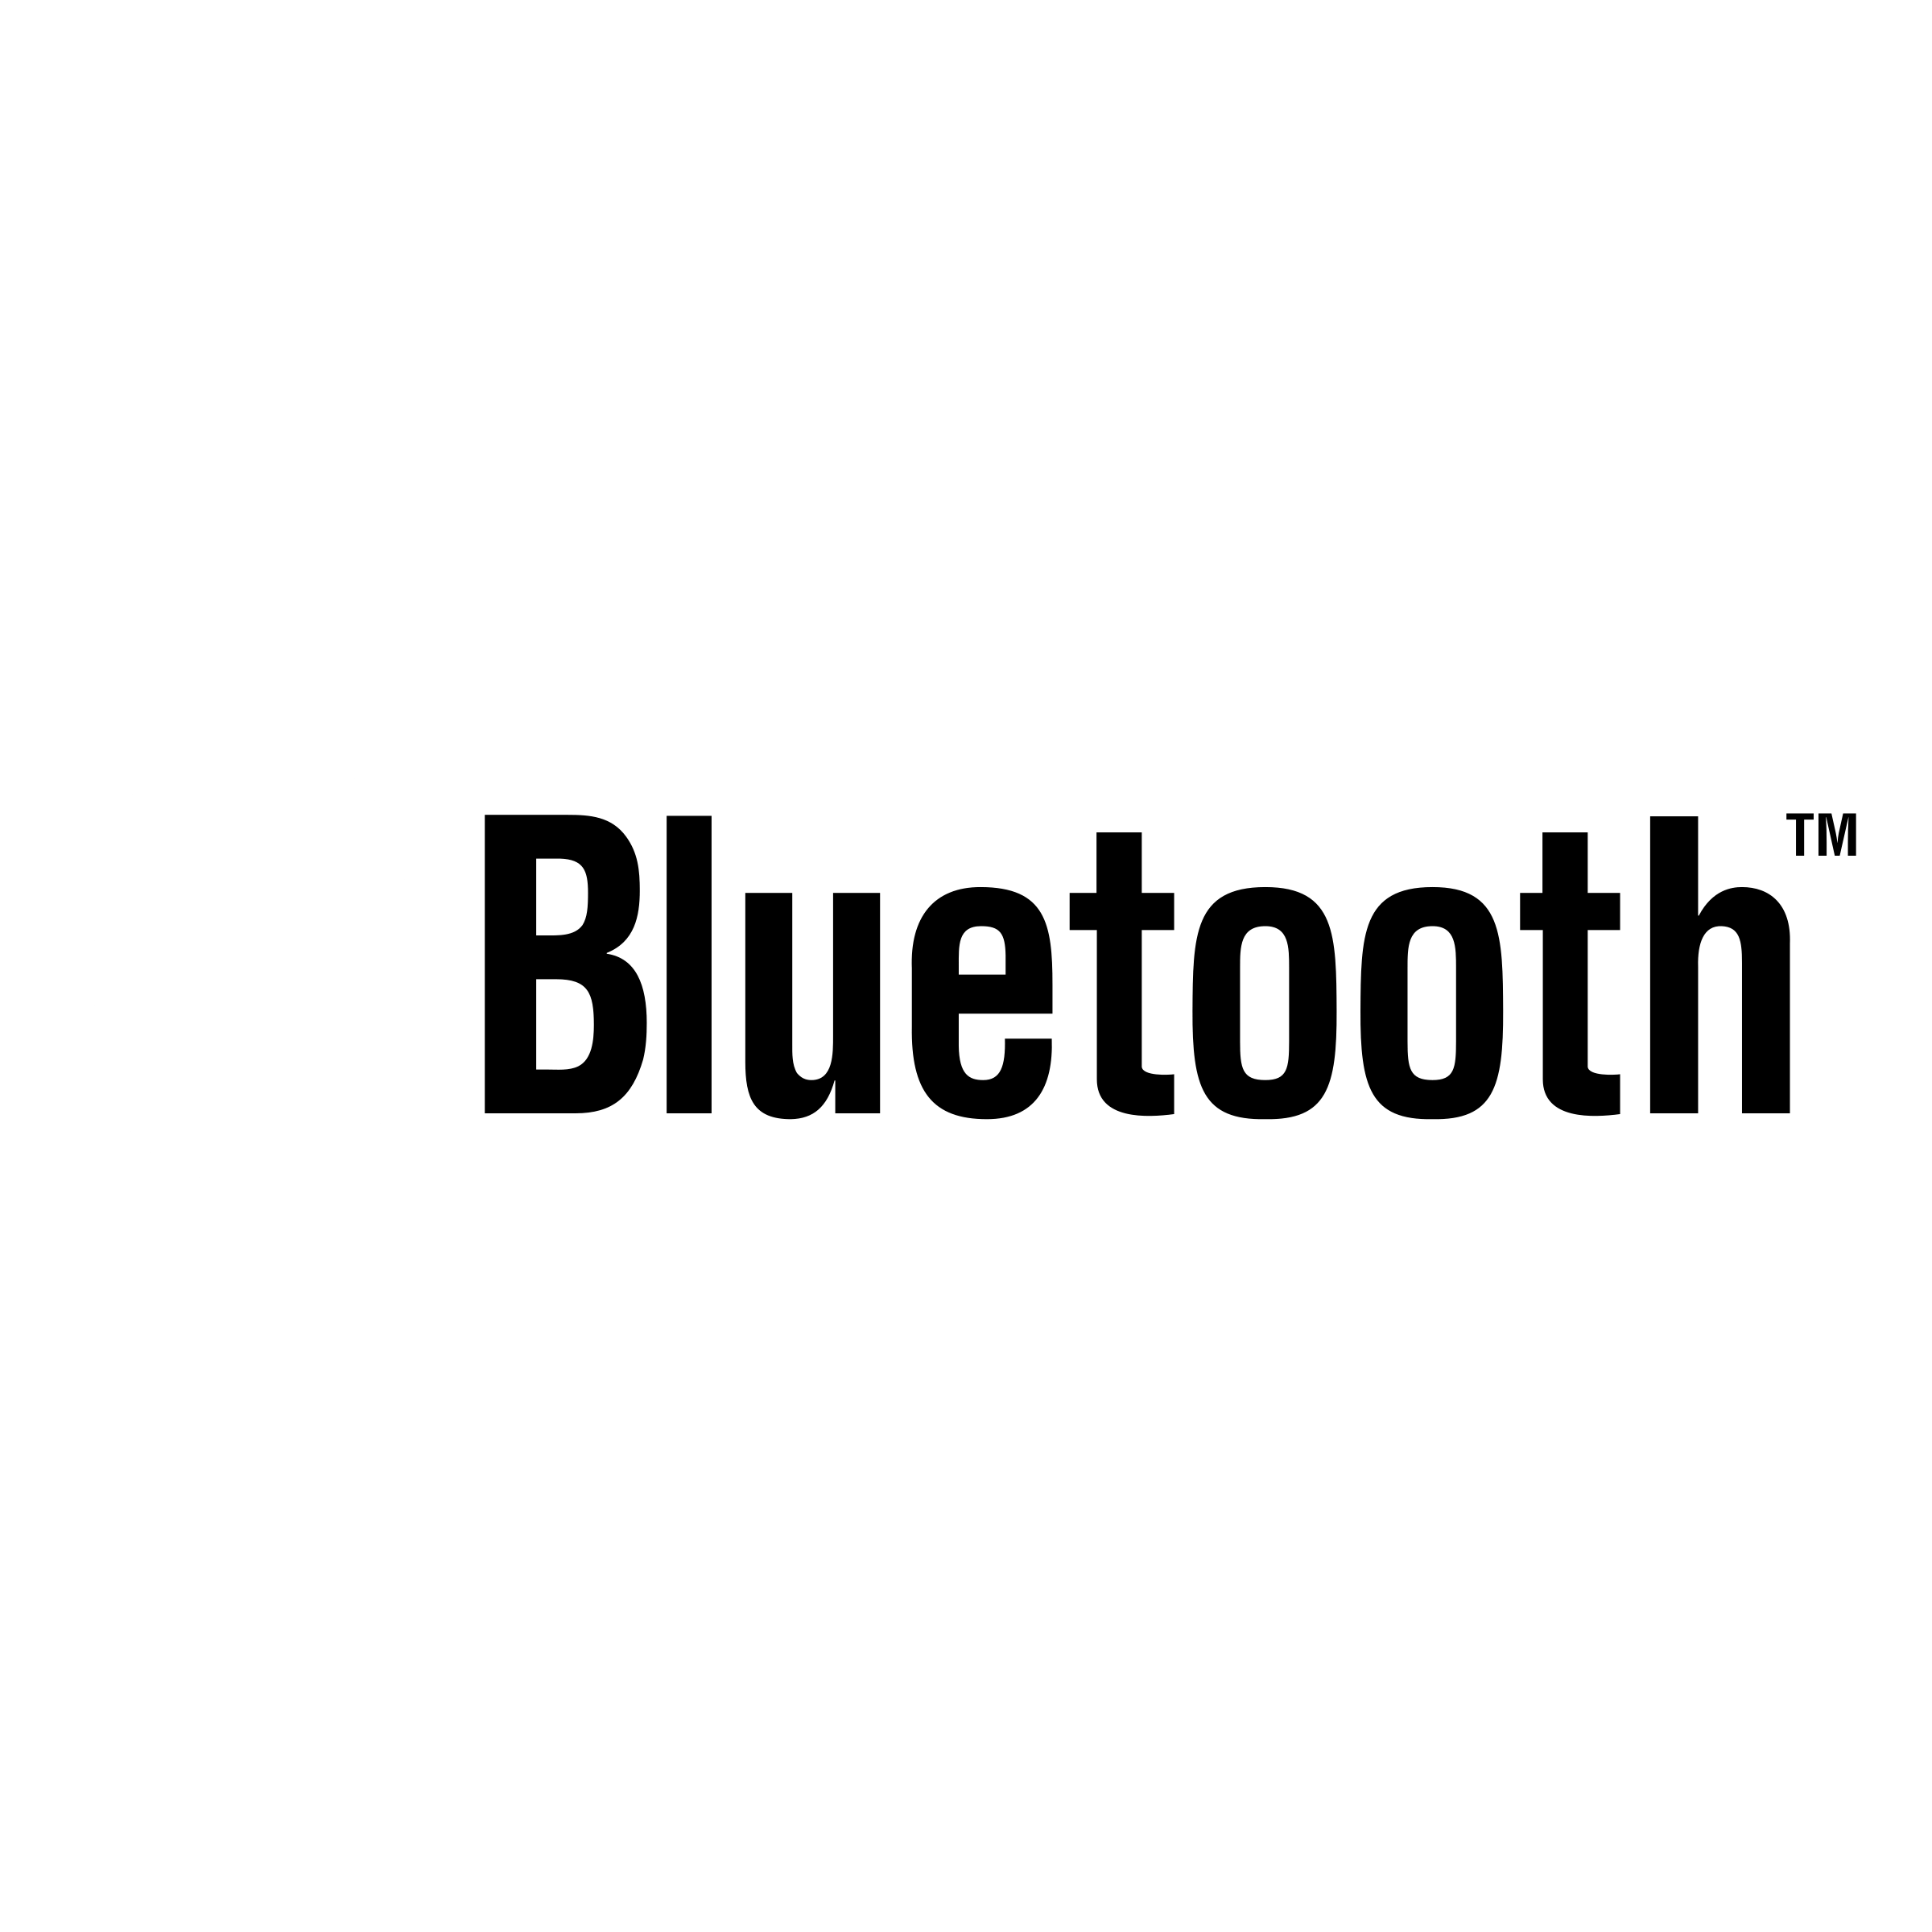 Buetooth Logo - Bluetooth Logo PNG Transparent & SVG Vector - Freebie Supply